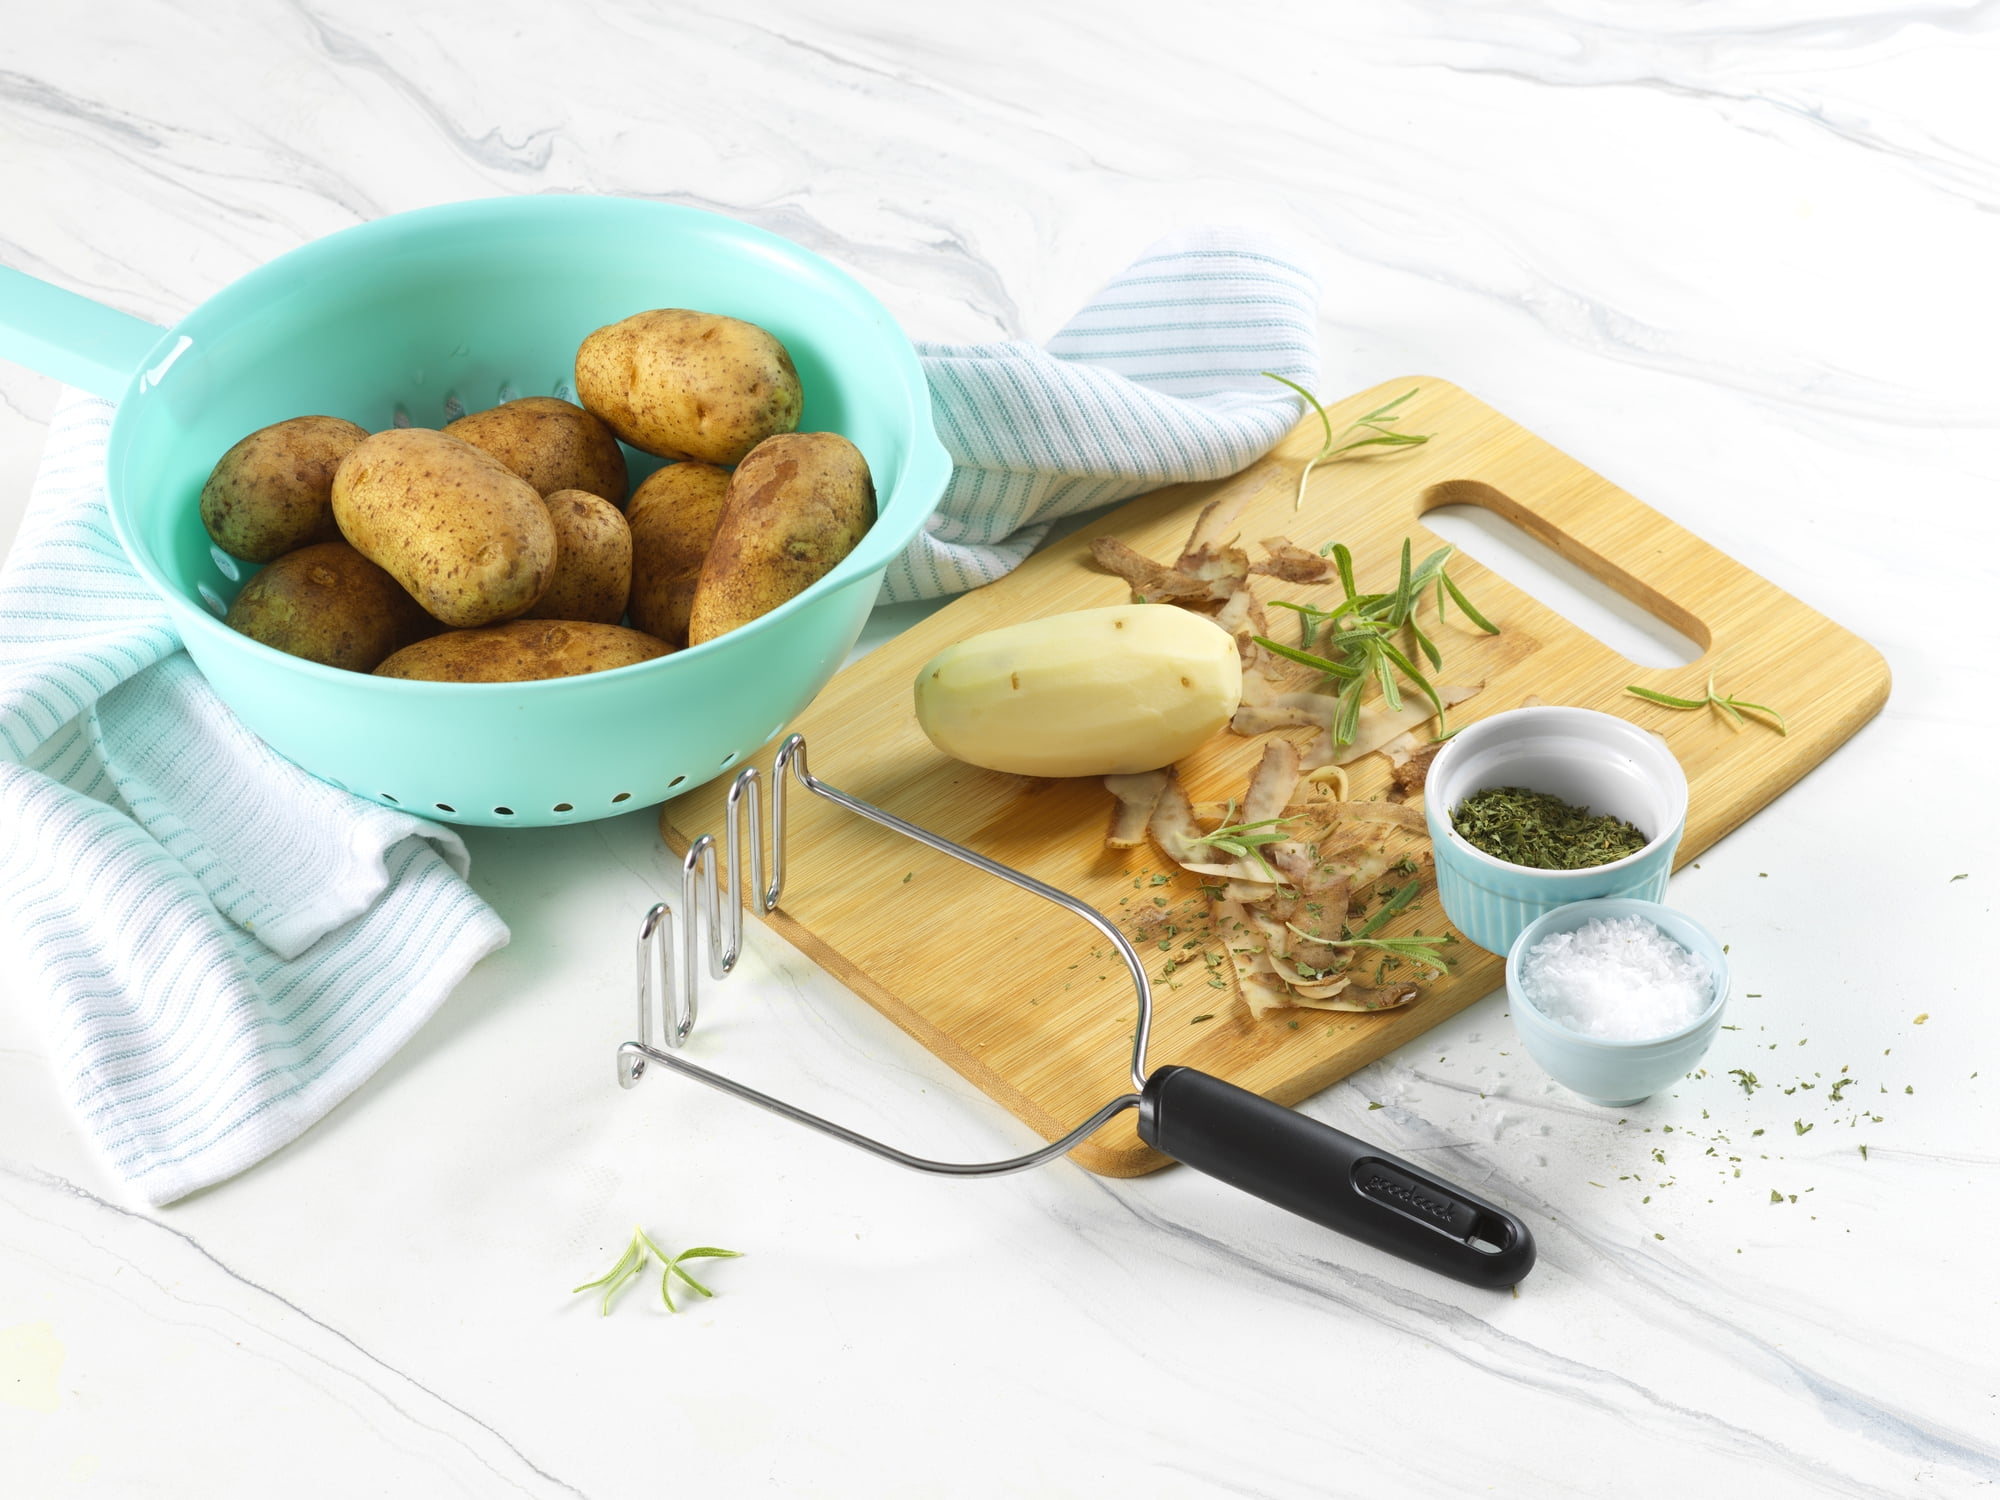 Zekpro Potato Masher, Stainless Steel Food Masher Kitchen Tool for